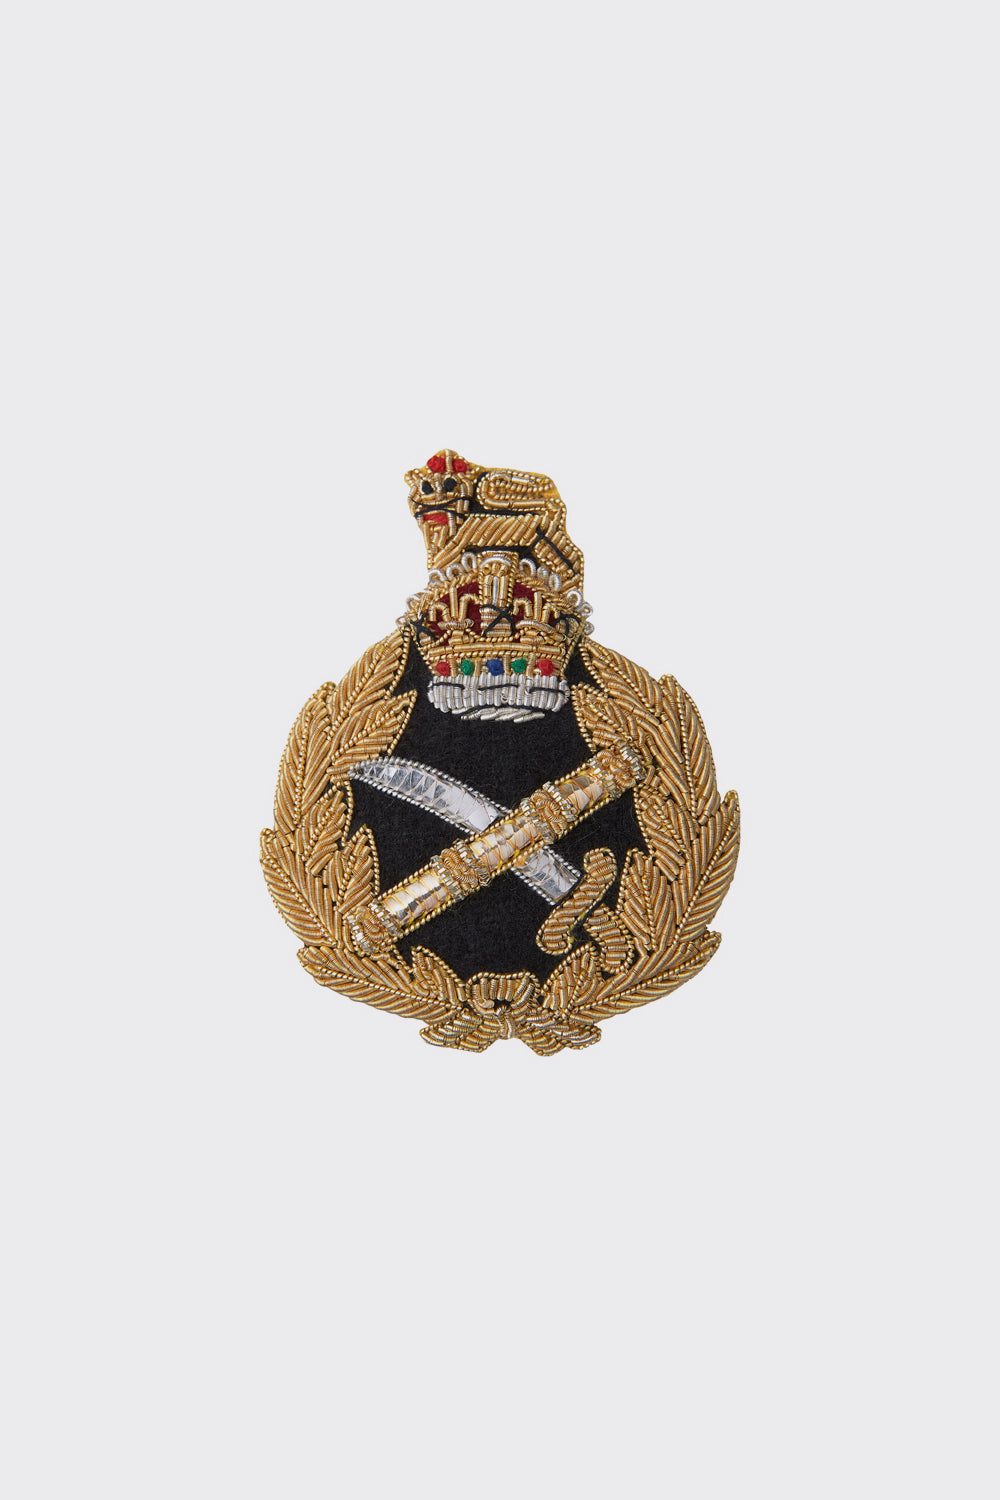 British Army Generals Beret Badge